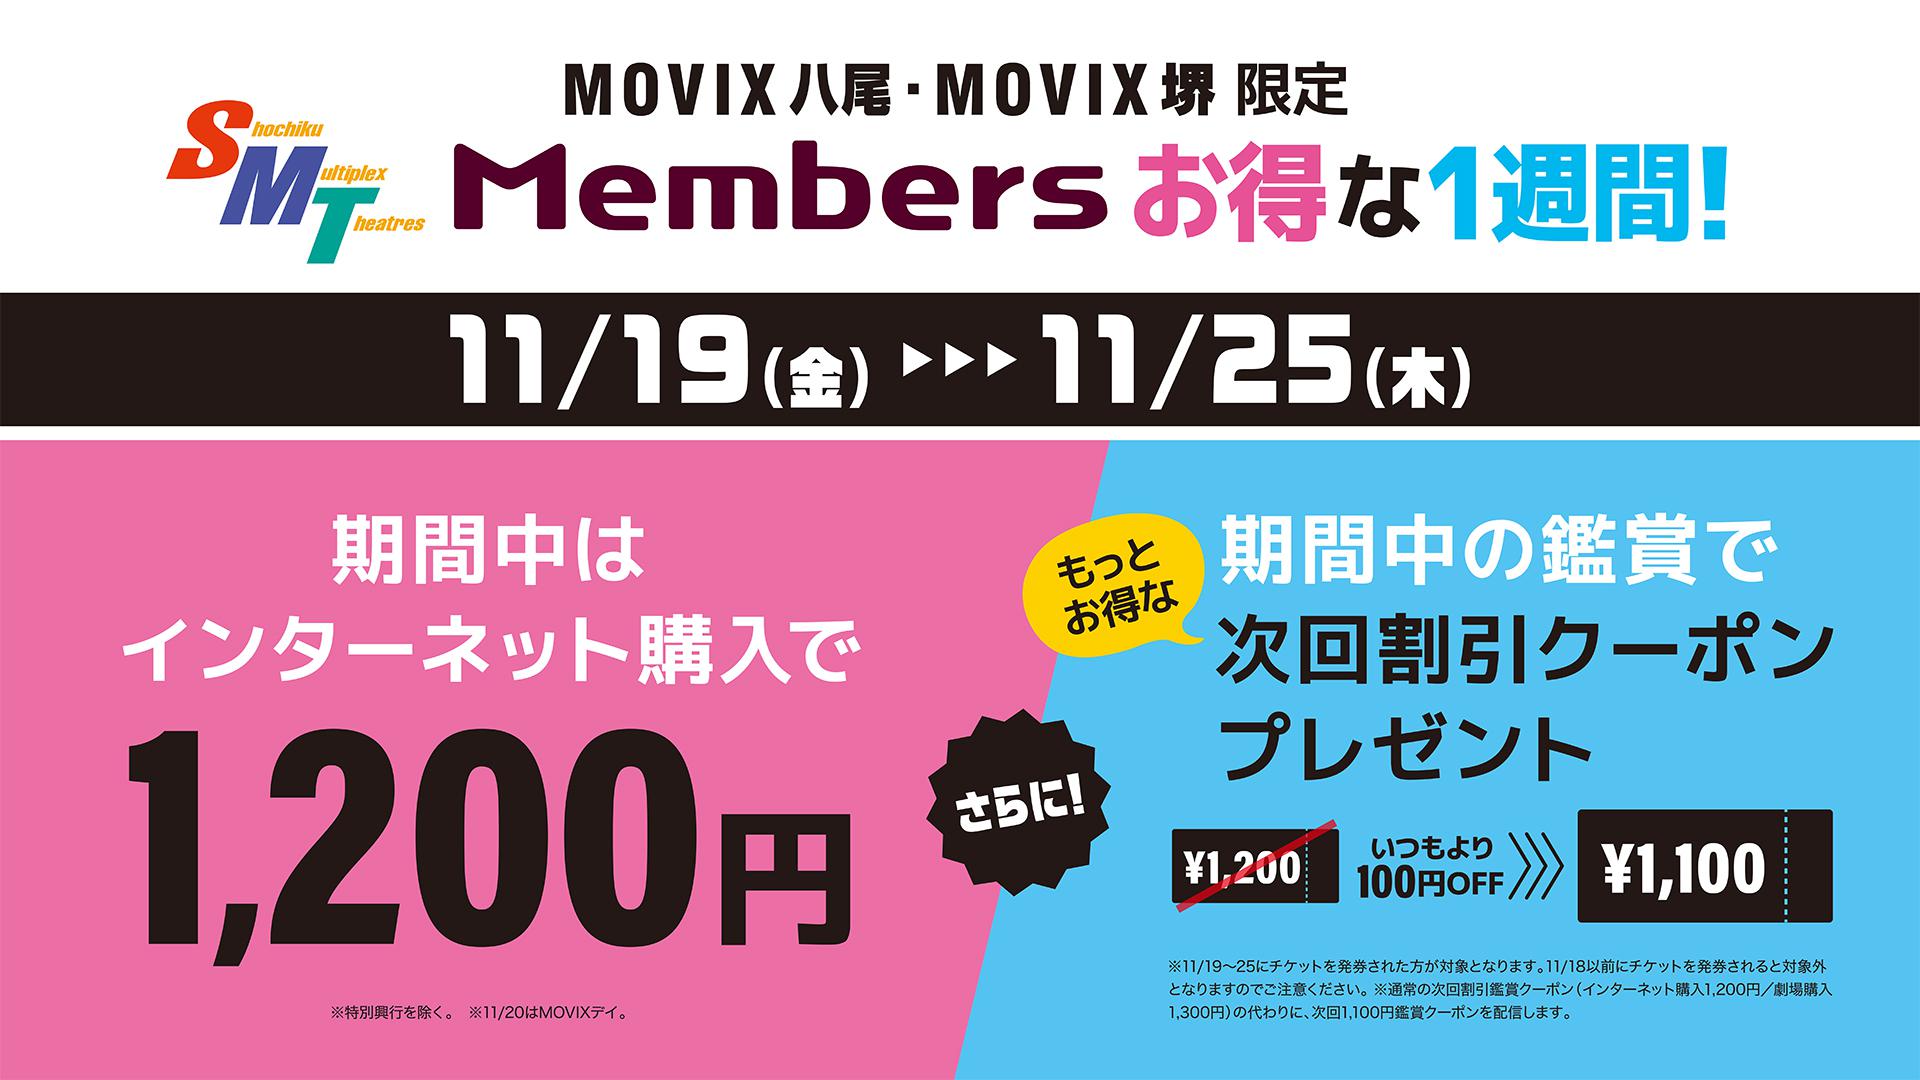 Smt Membersのお得な1週間 11 19 金 25 木 は1 0円で映画鑑賞 Movix八尾